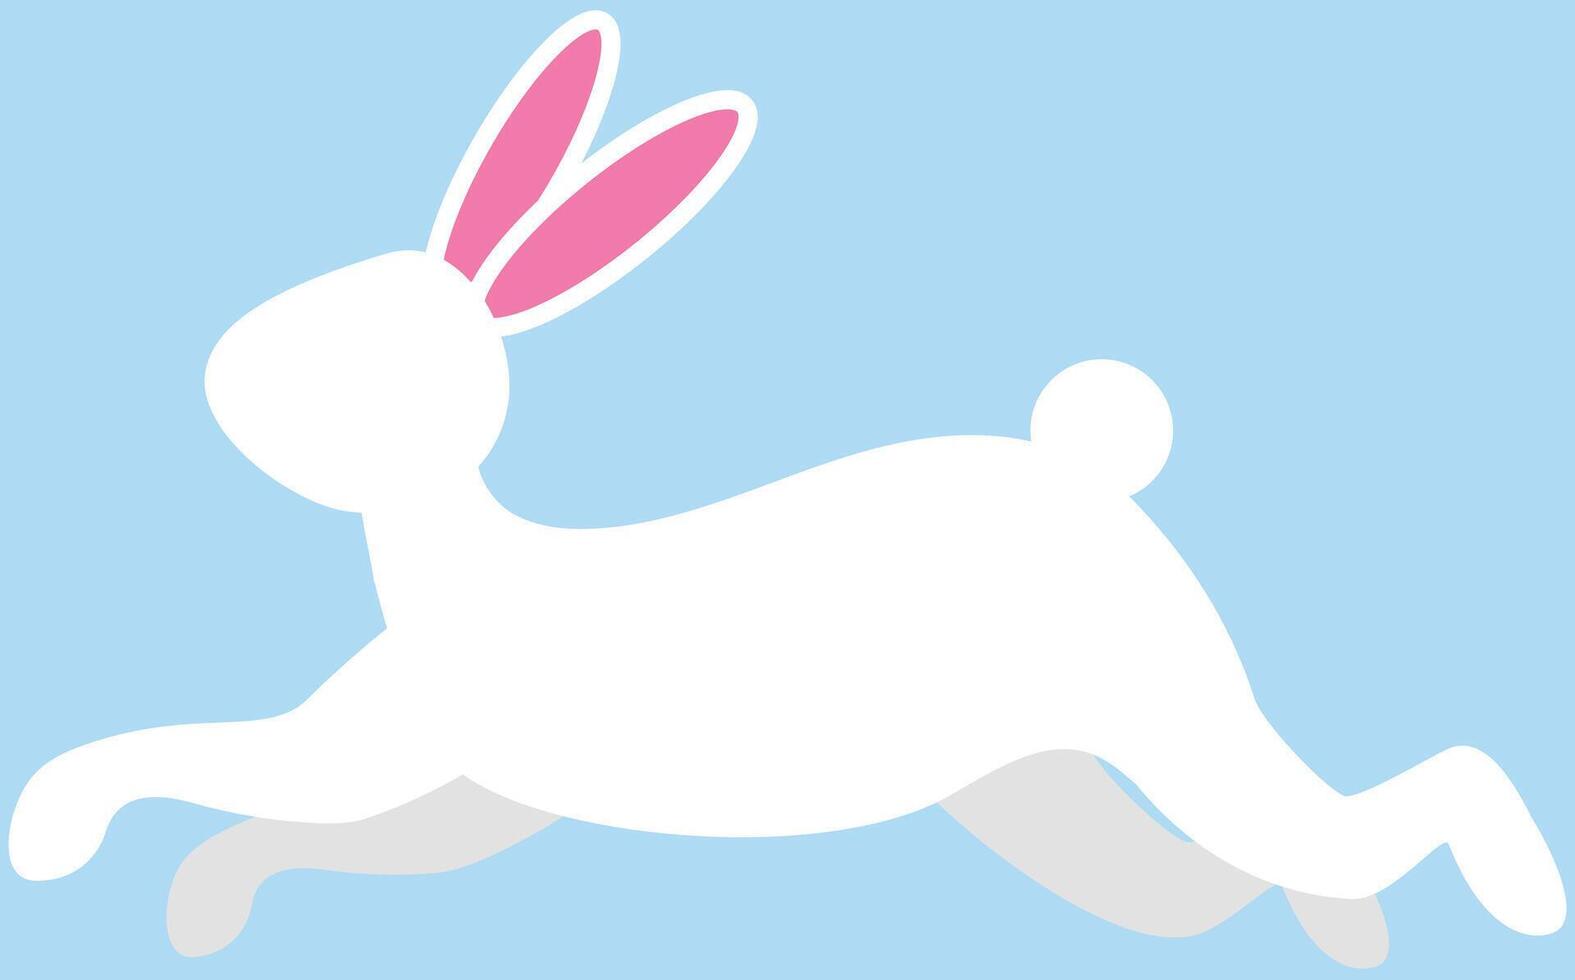 jumping Pasen konijn in tekenfilm stijl. wit konijn sjabloon vector